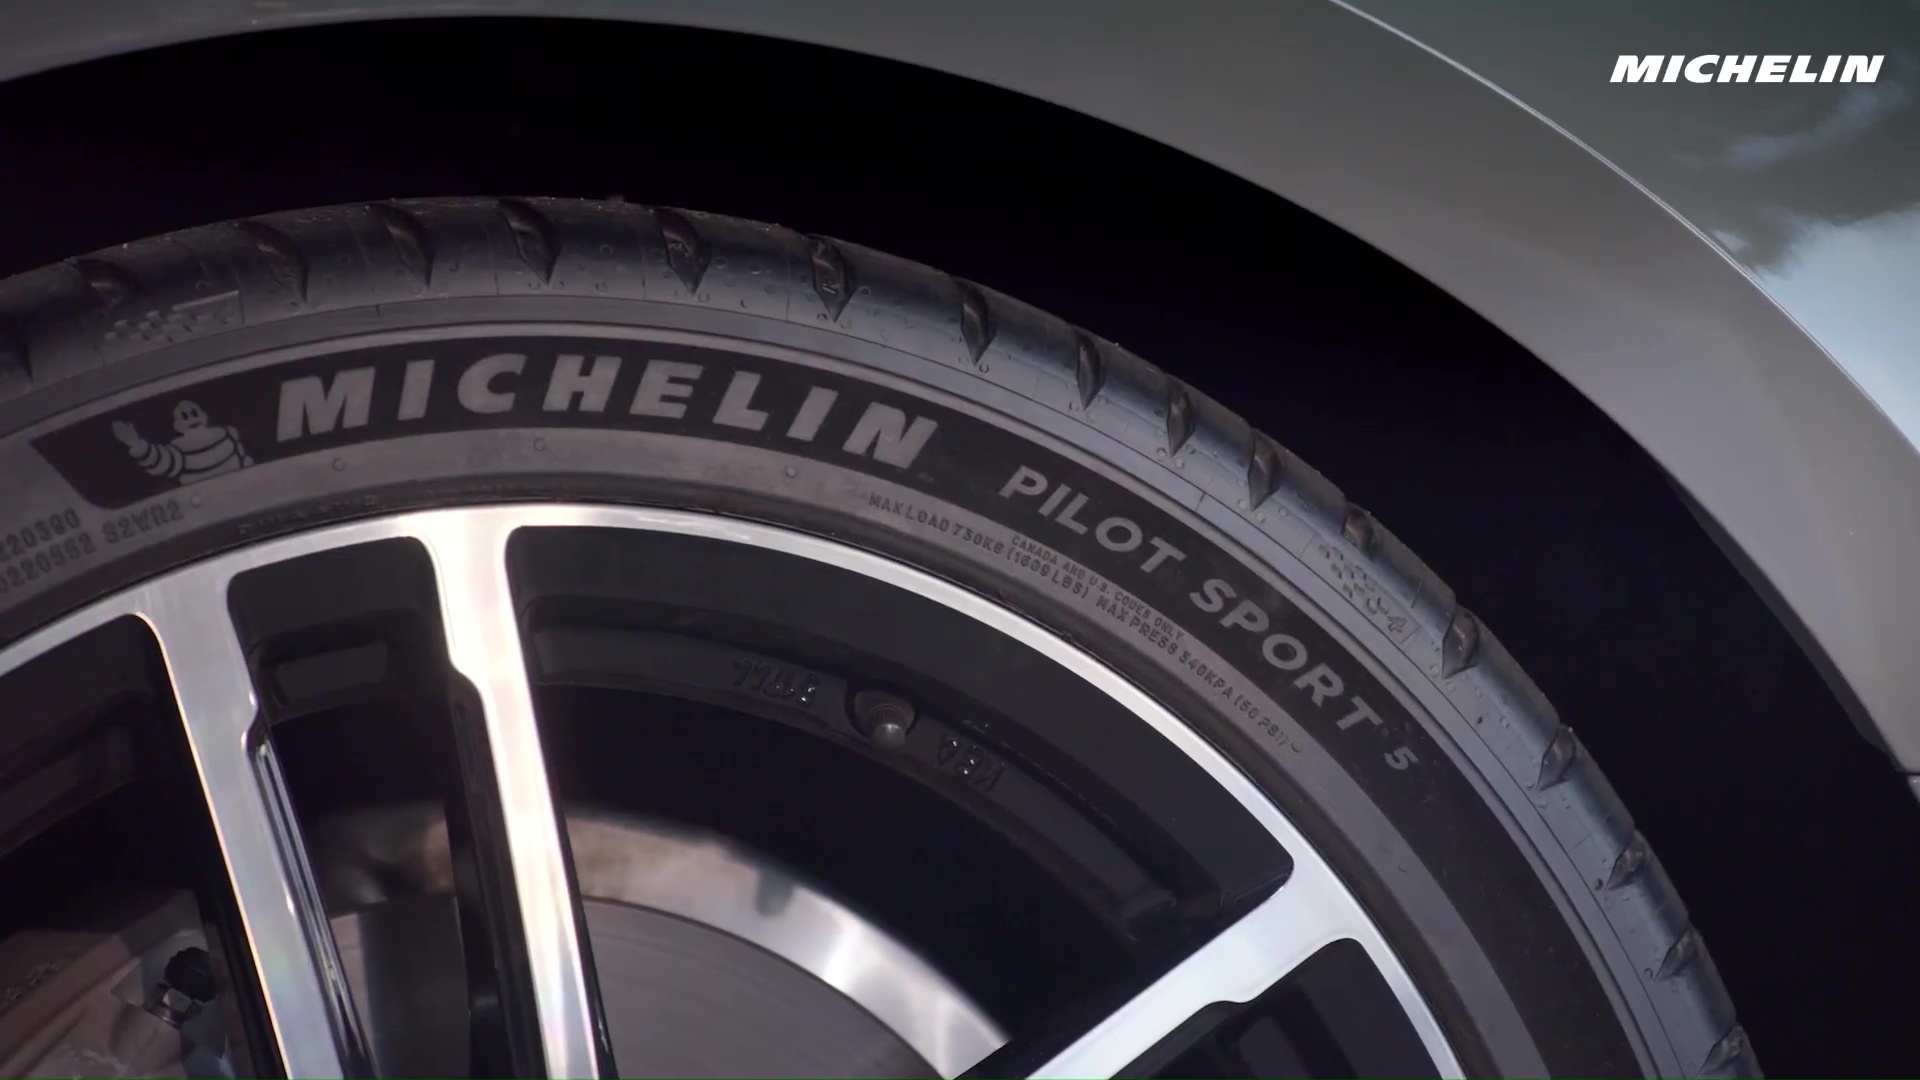 concept Blacken Upstream Michelin Pilot Sport 5 introduced - Dual Sport Tread Design, better  long-lasting performance; 17-20" sizes - paultan.org